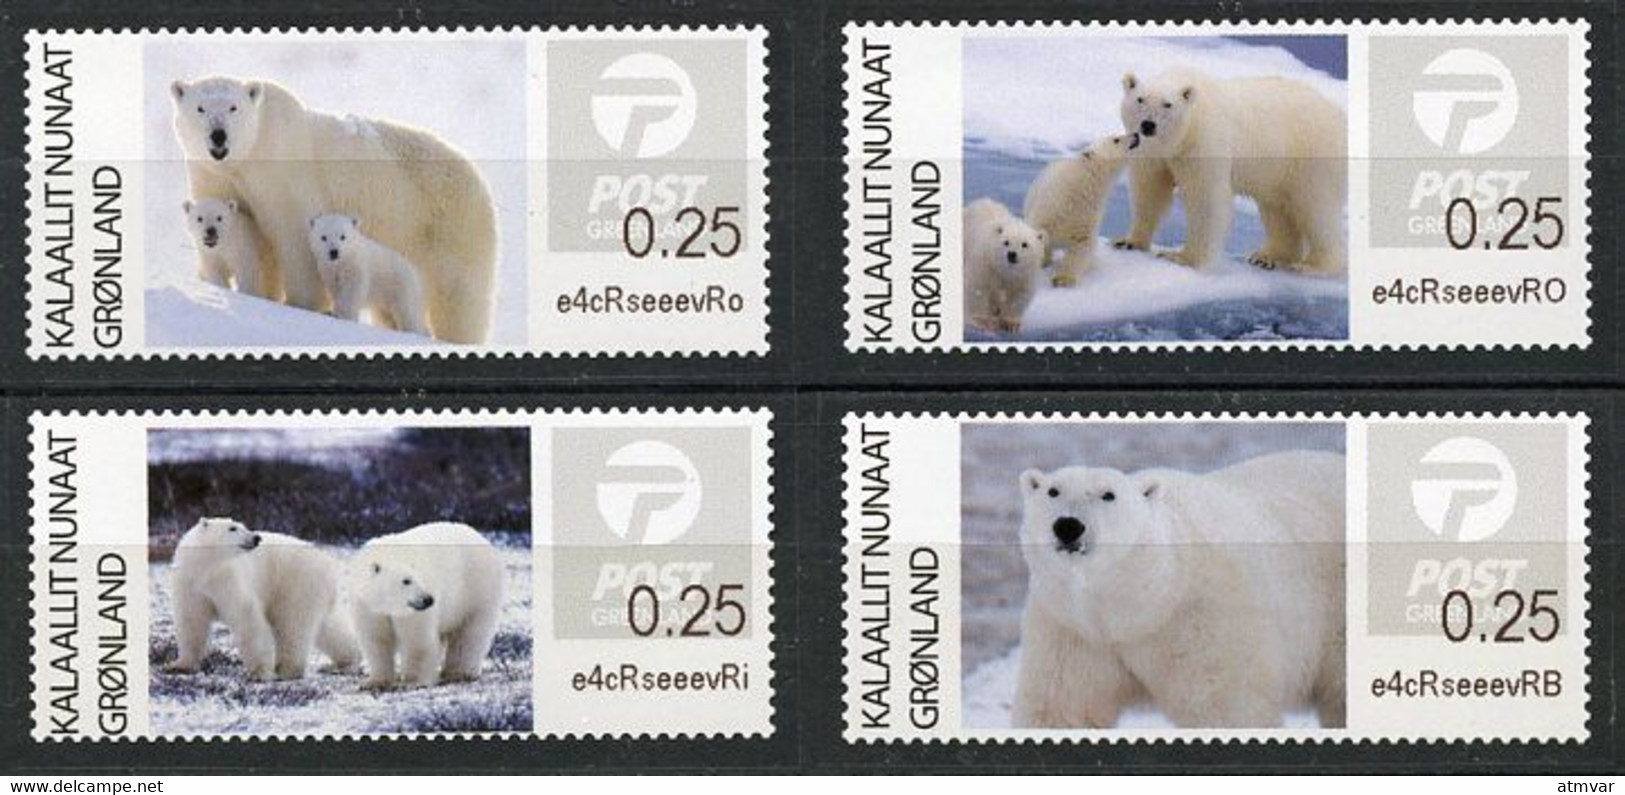 GREENLAND GROENLAND (2019) - ATM Series - Polar Bears, Der Eisbär, Ours Blanc, Oso Polar (Ursus Thalarctos Maritimus) - Distributori